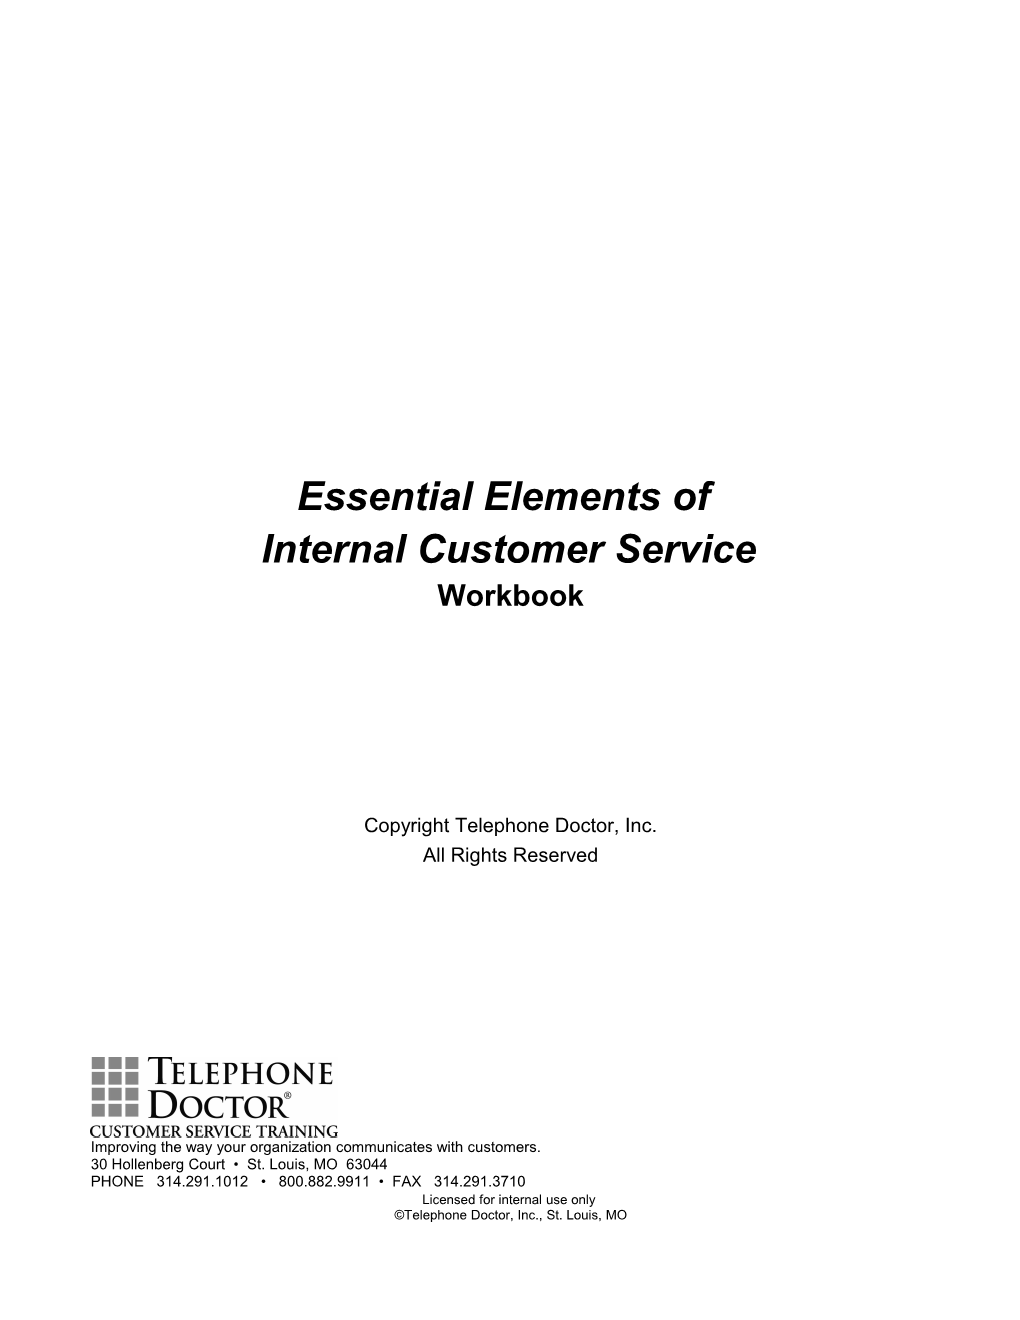 Essential Elements Of Internal Customer Service Workbook